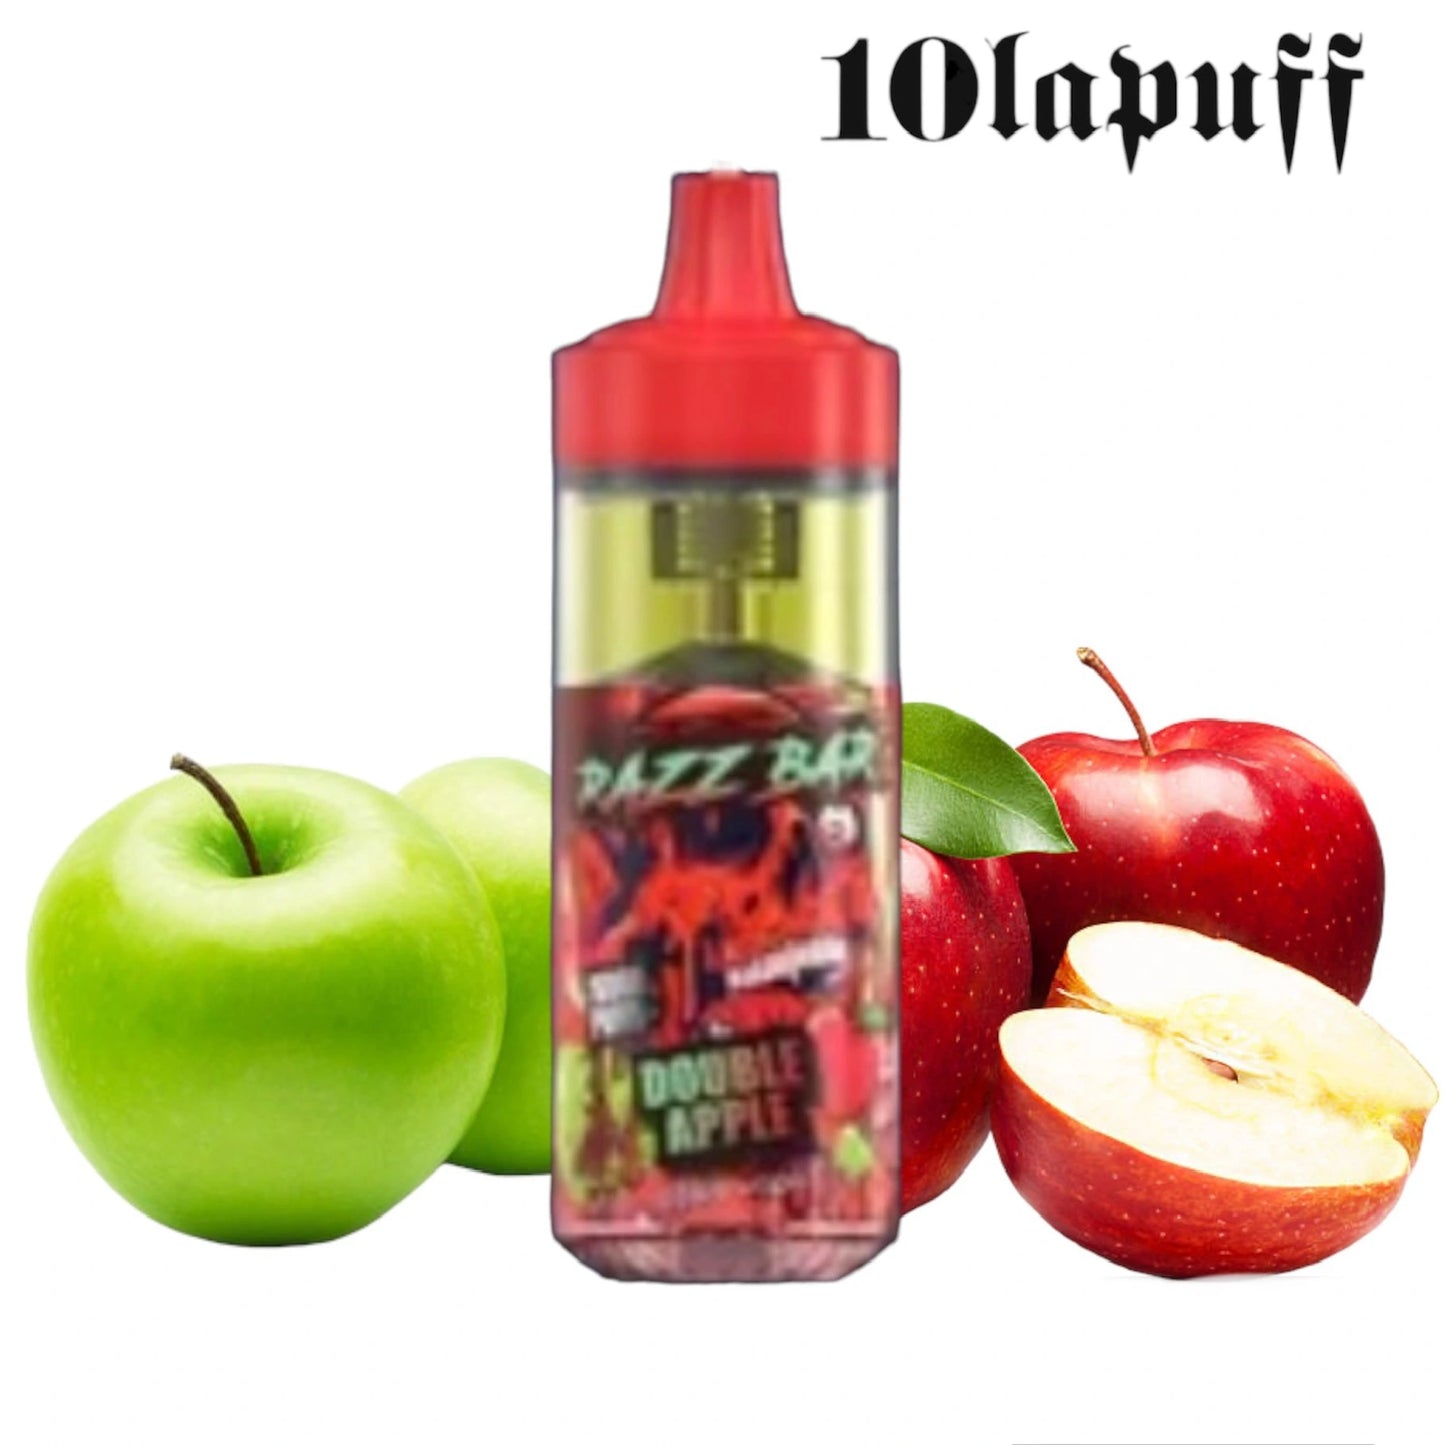 PUFF 16000 RAZZBAR – Doppelter Apfel